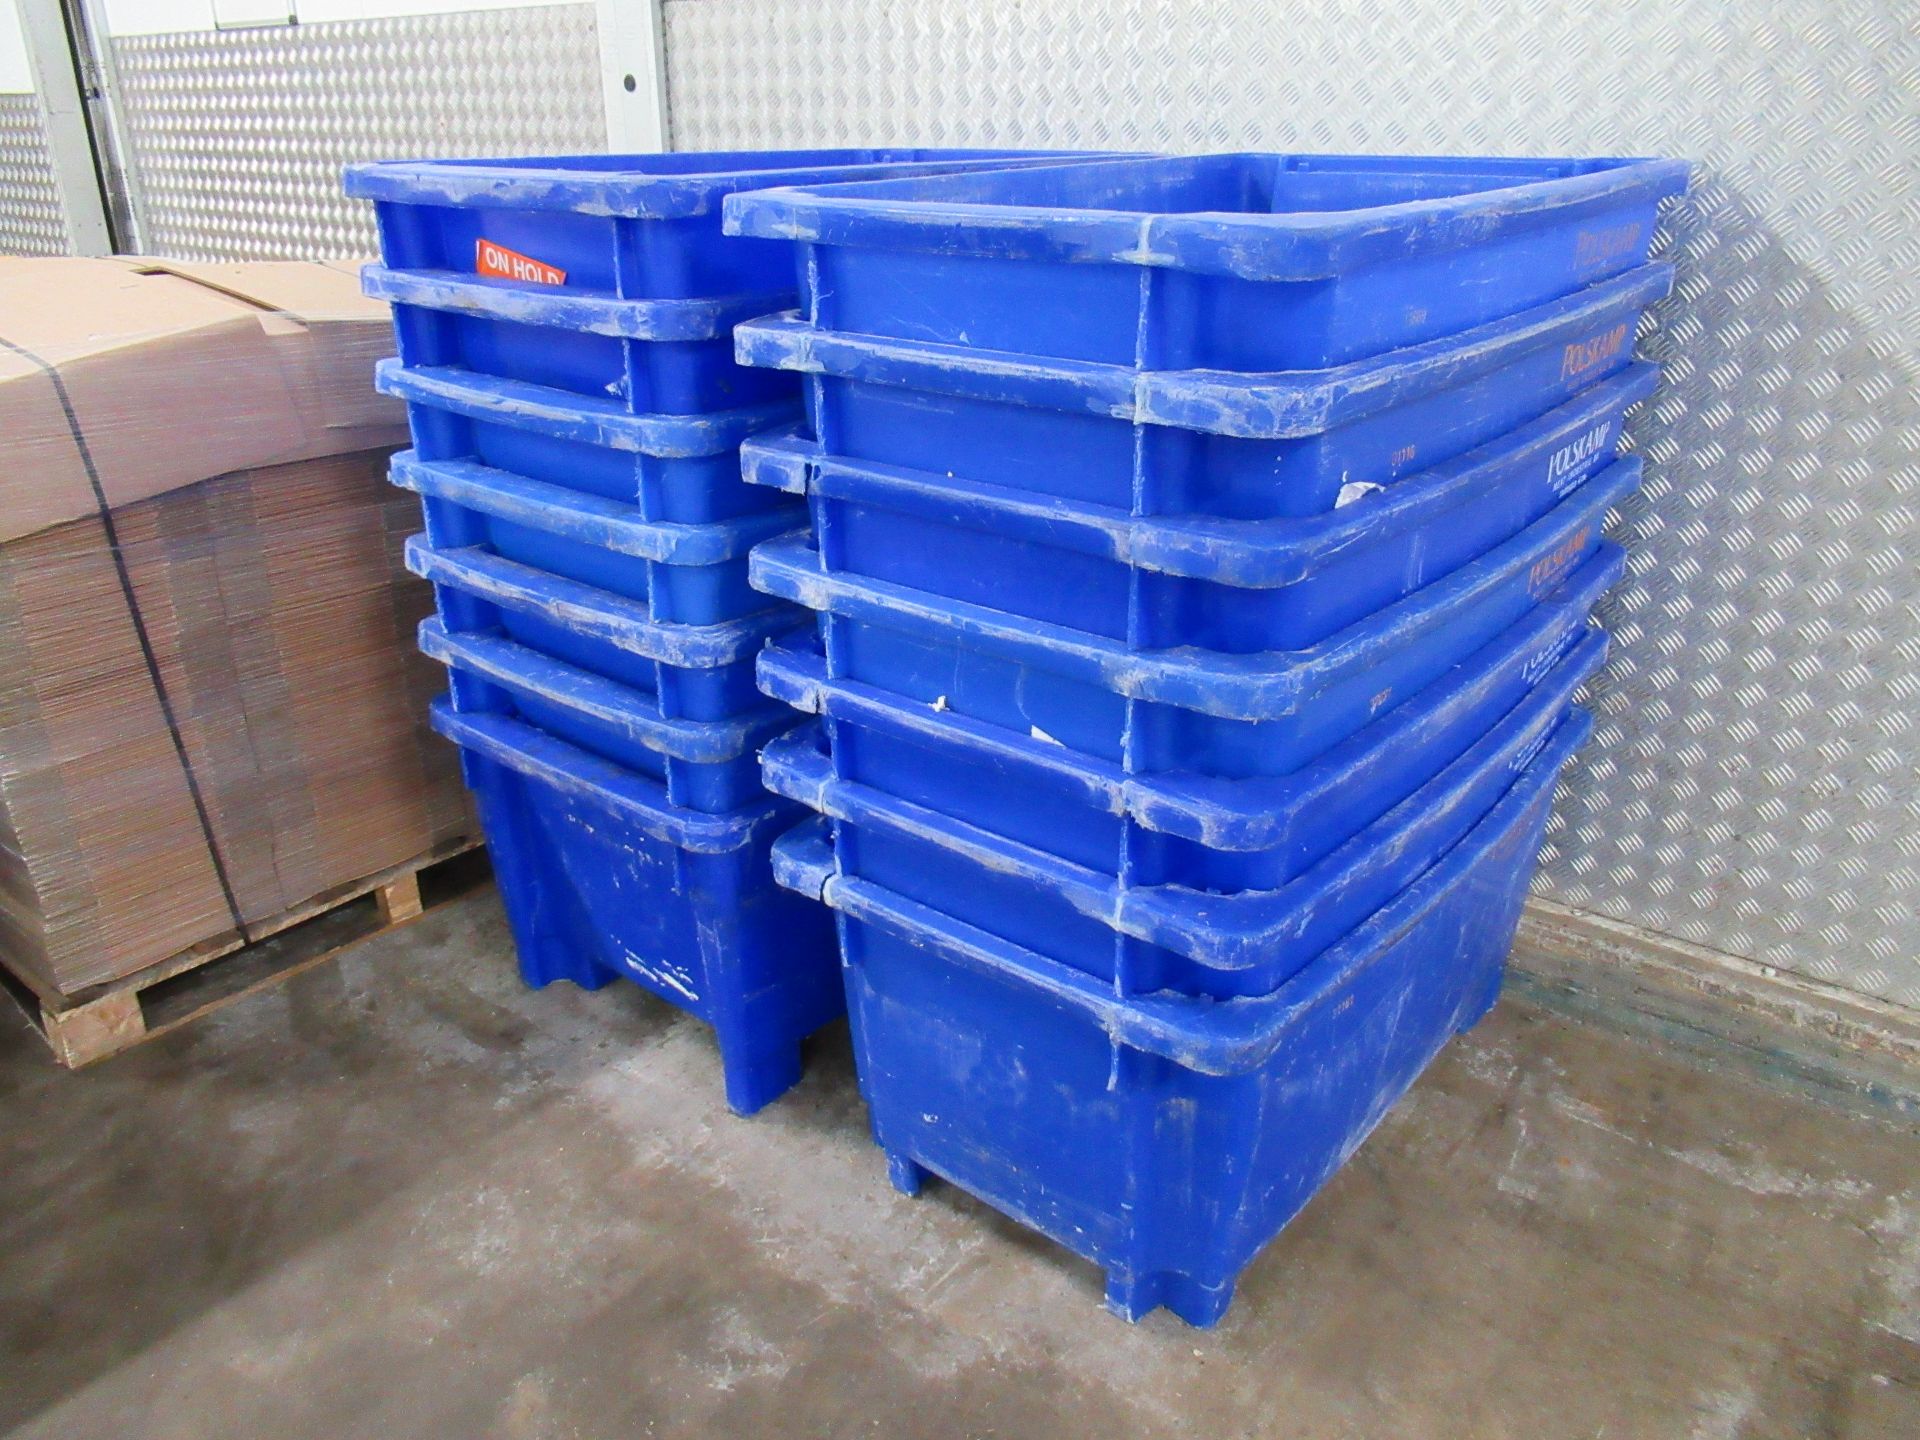 14 Blue plastic staking bins